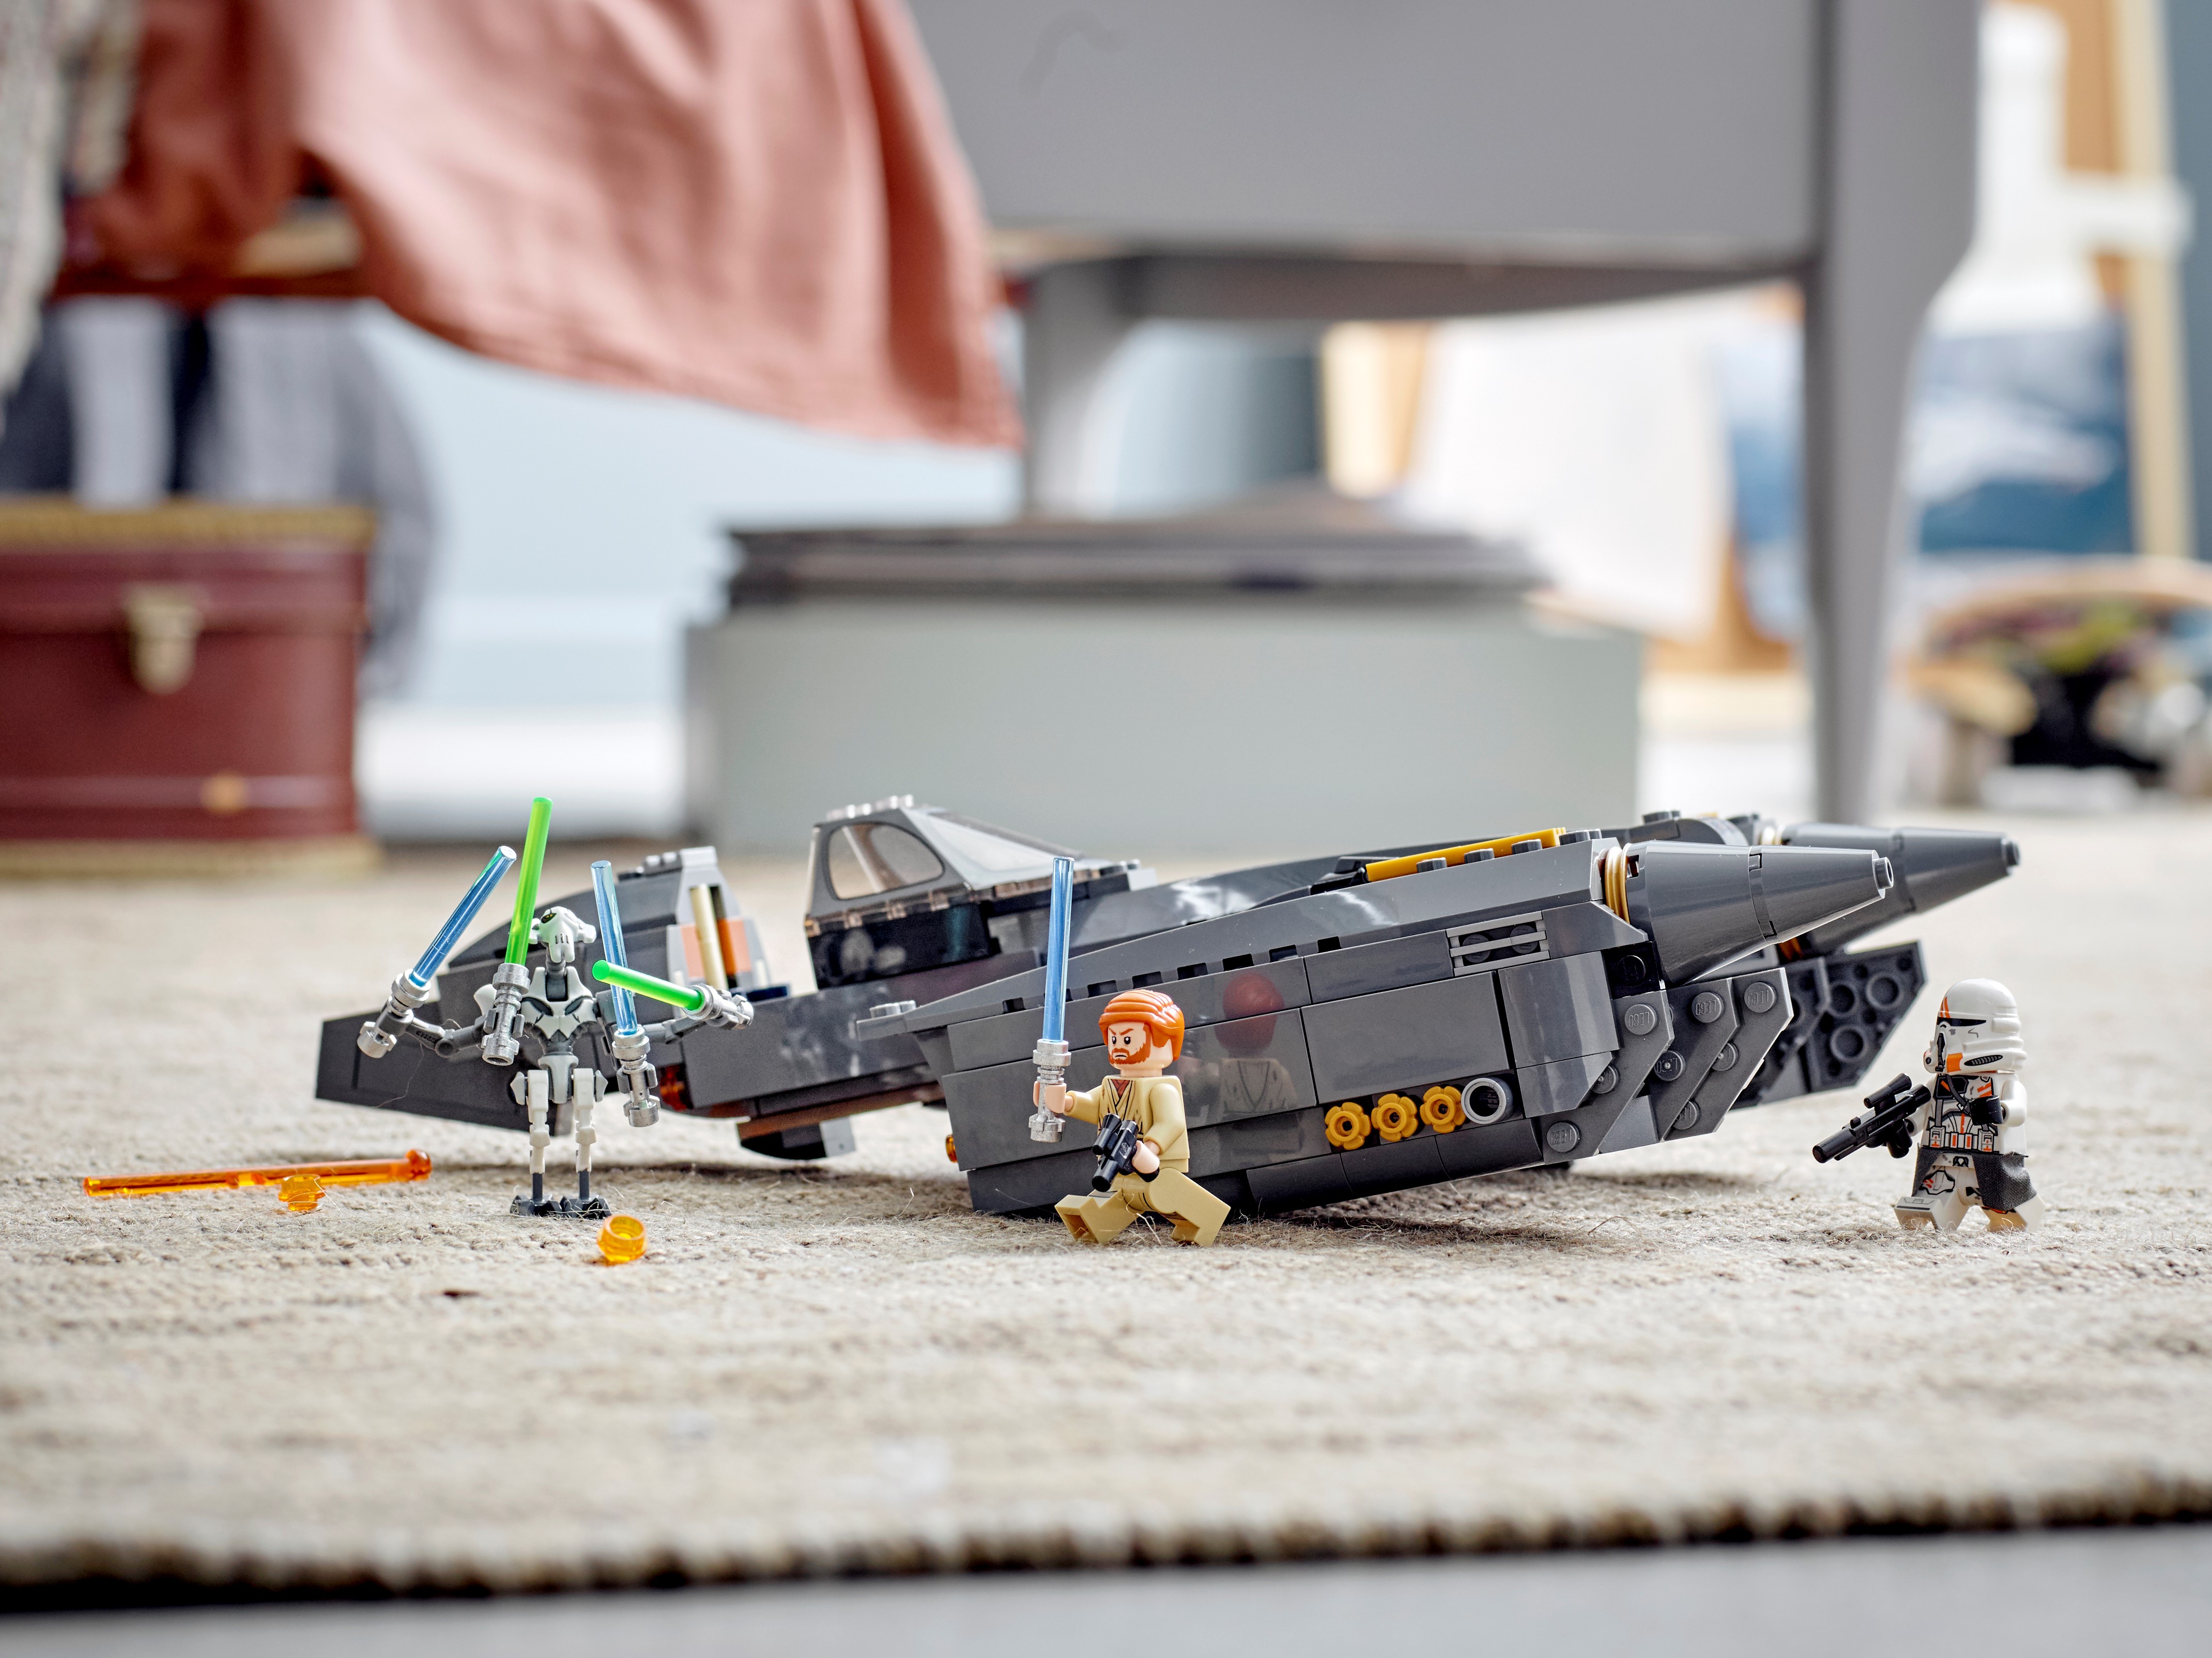 General Grievous/'s Starfighter LEGO Star Wars 75286 for sale online